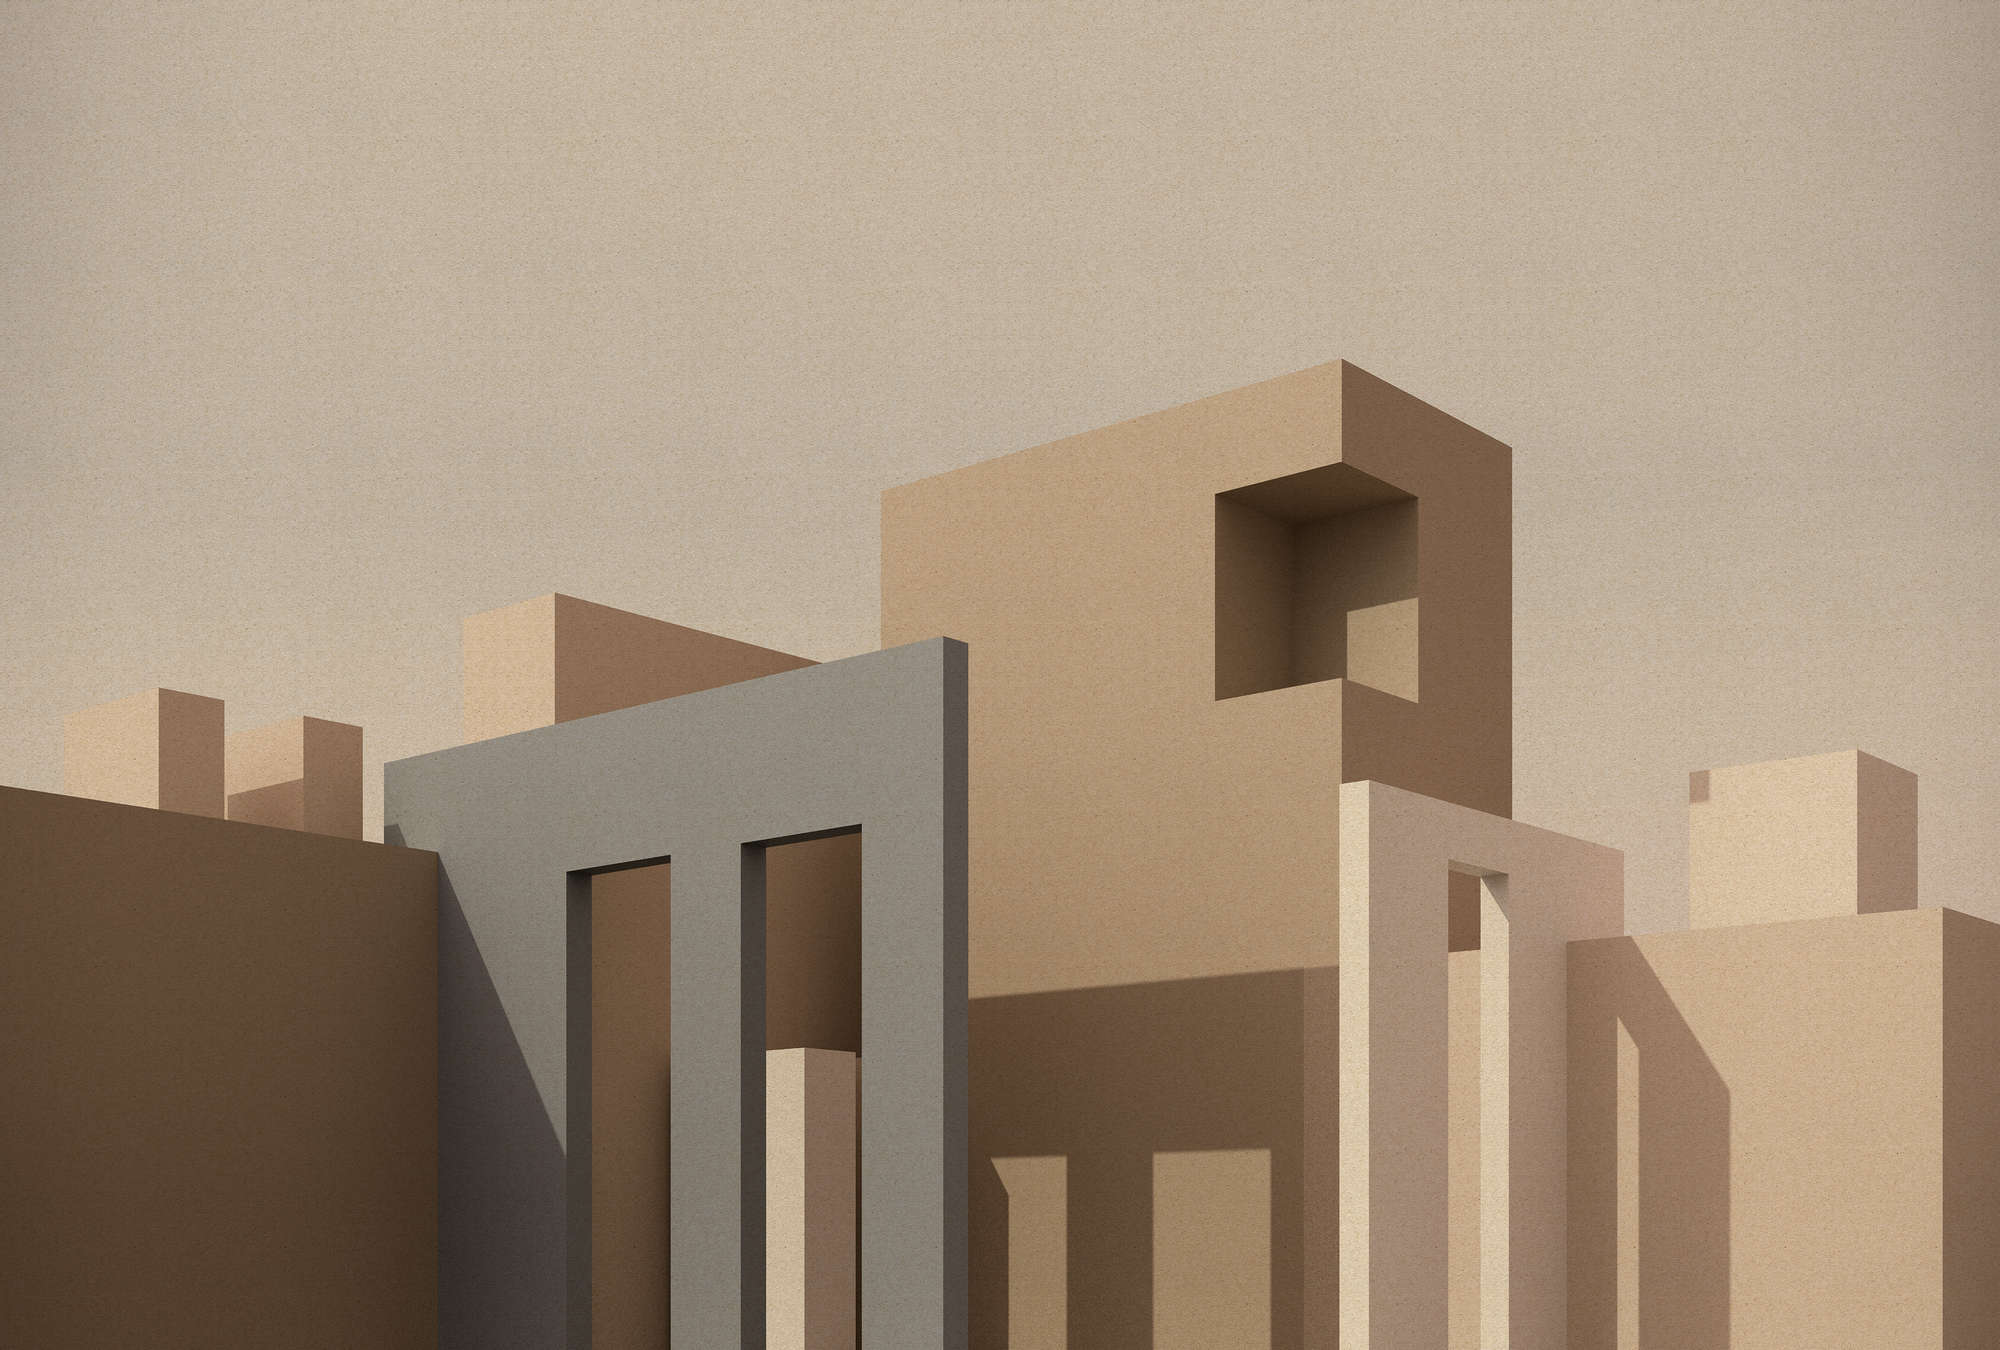             Tangier 1 - Architecture Cube Design Behang in Beige & Grijs
        